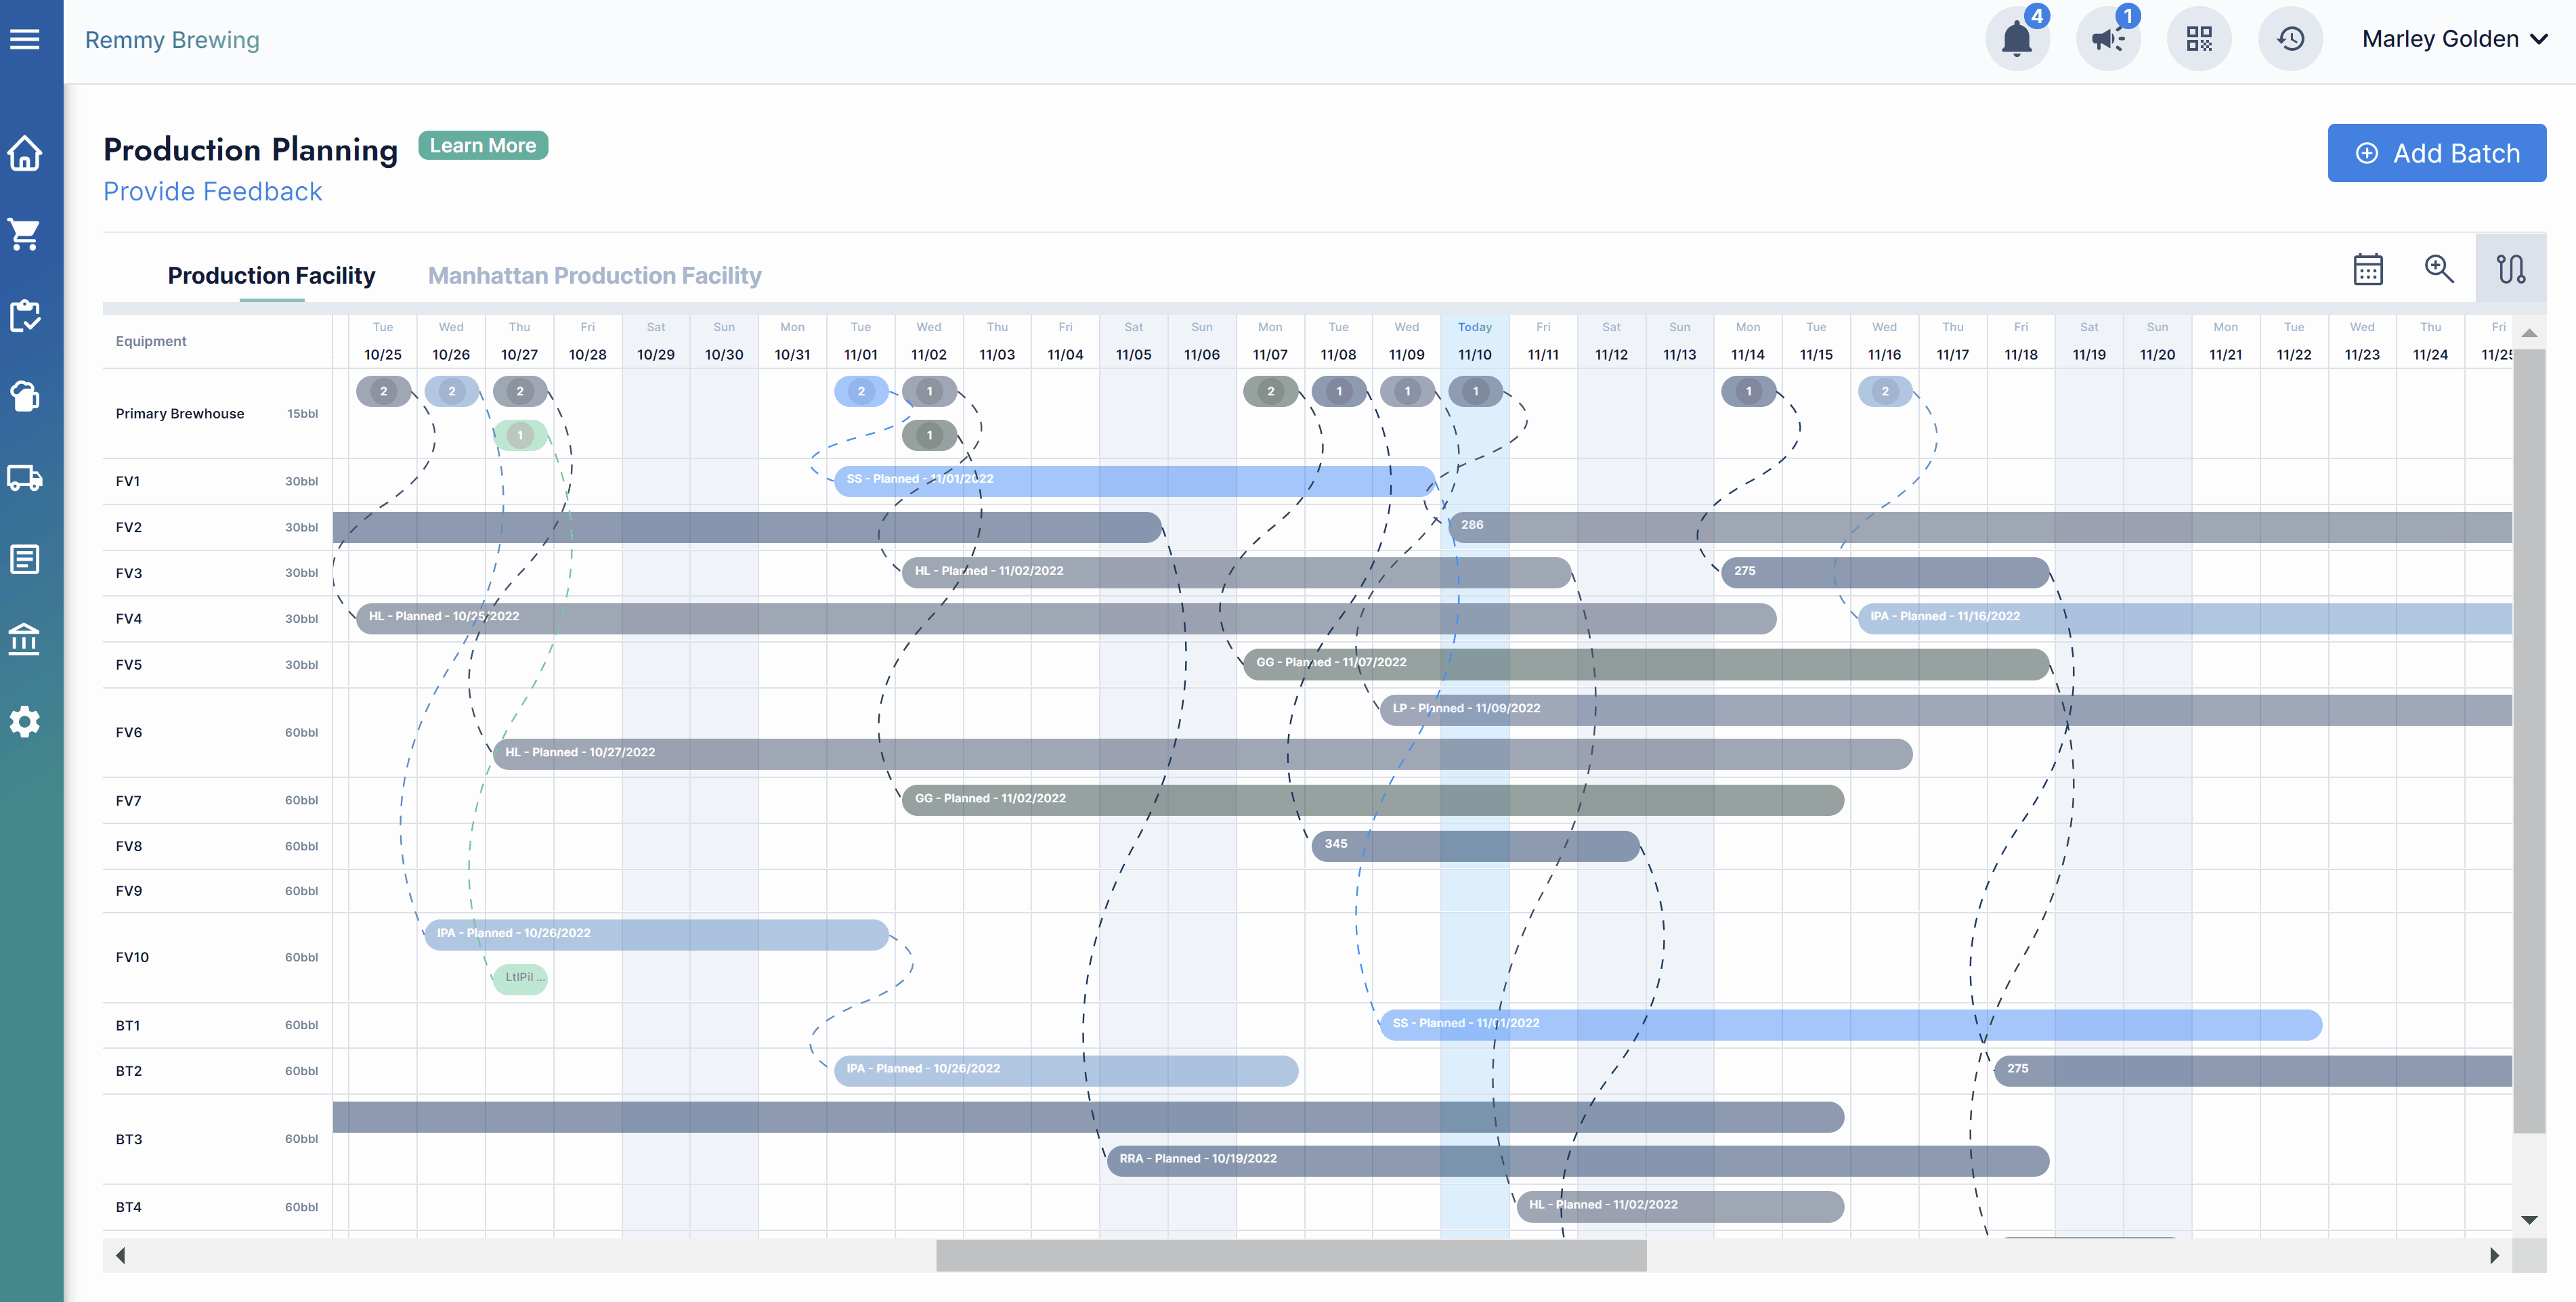 screenshot of production planning module in ekos brewery software